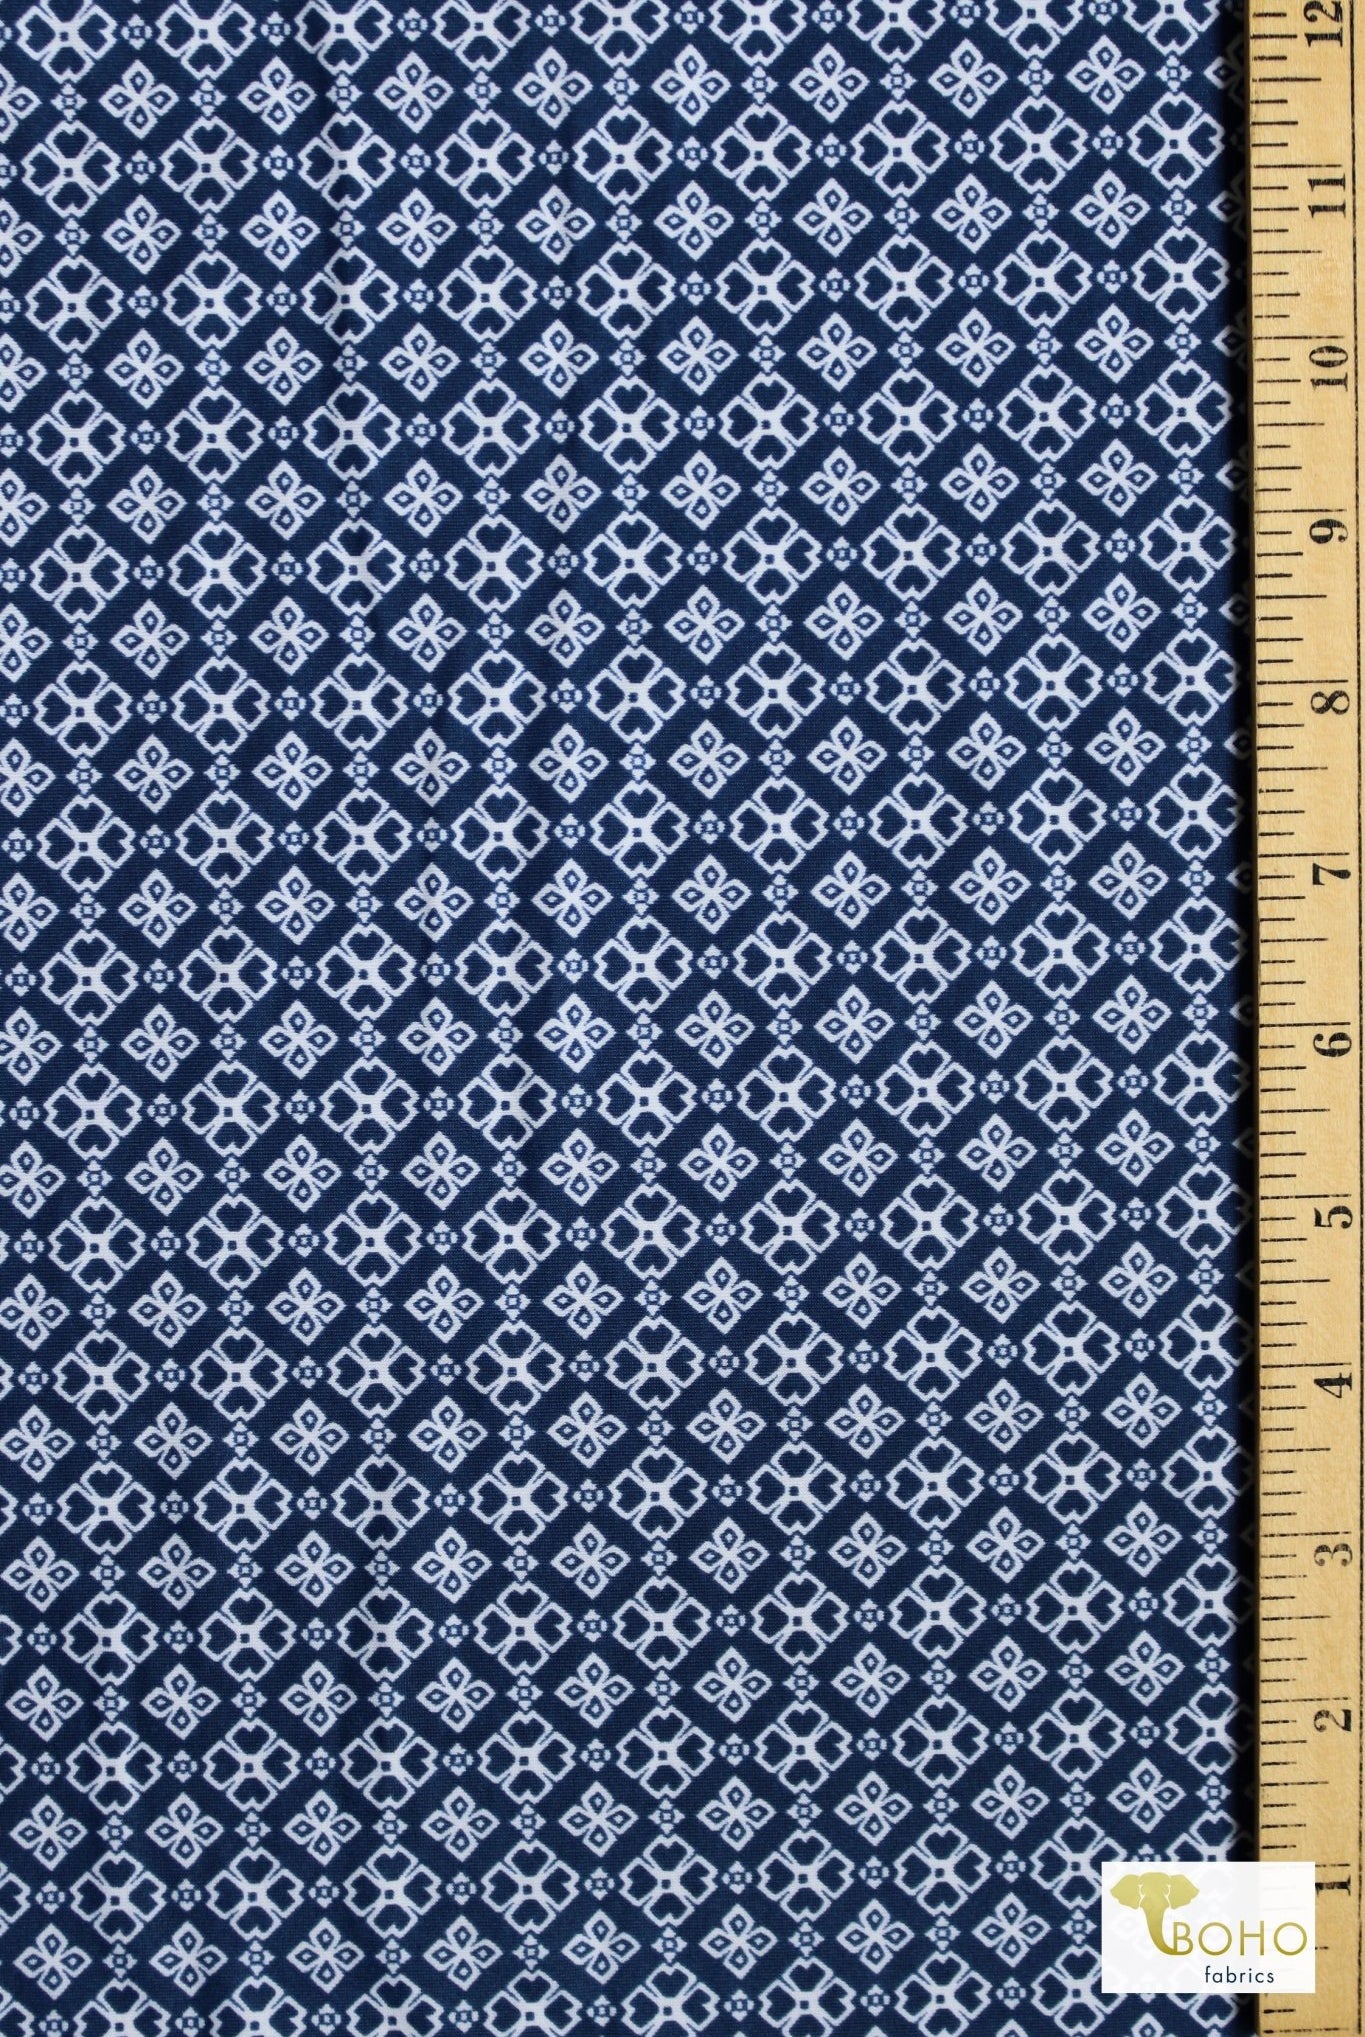 Indigo Kilim Blossoms, Swim/Athletic Knit Fabric - Boho Fabrics - Swim Knit, Printed Fabric